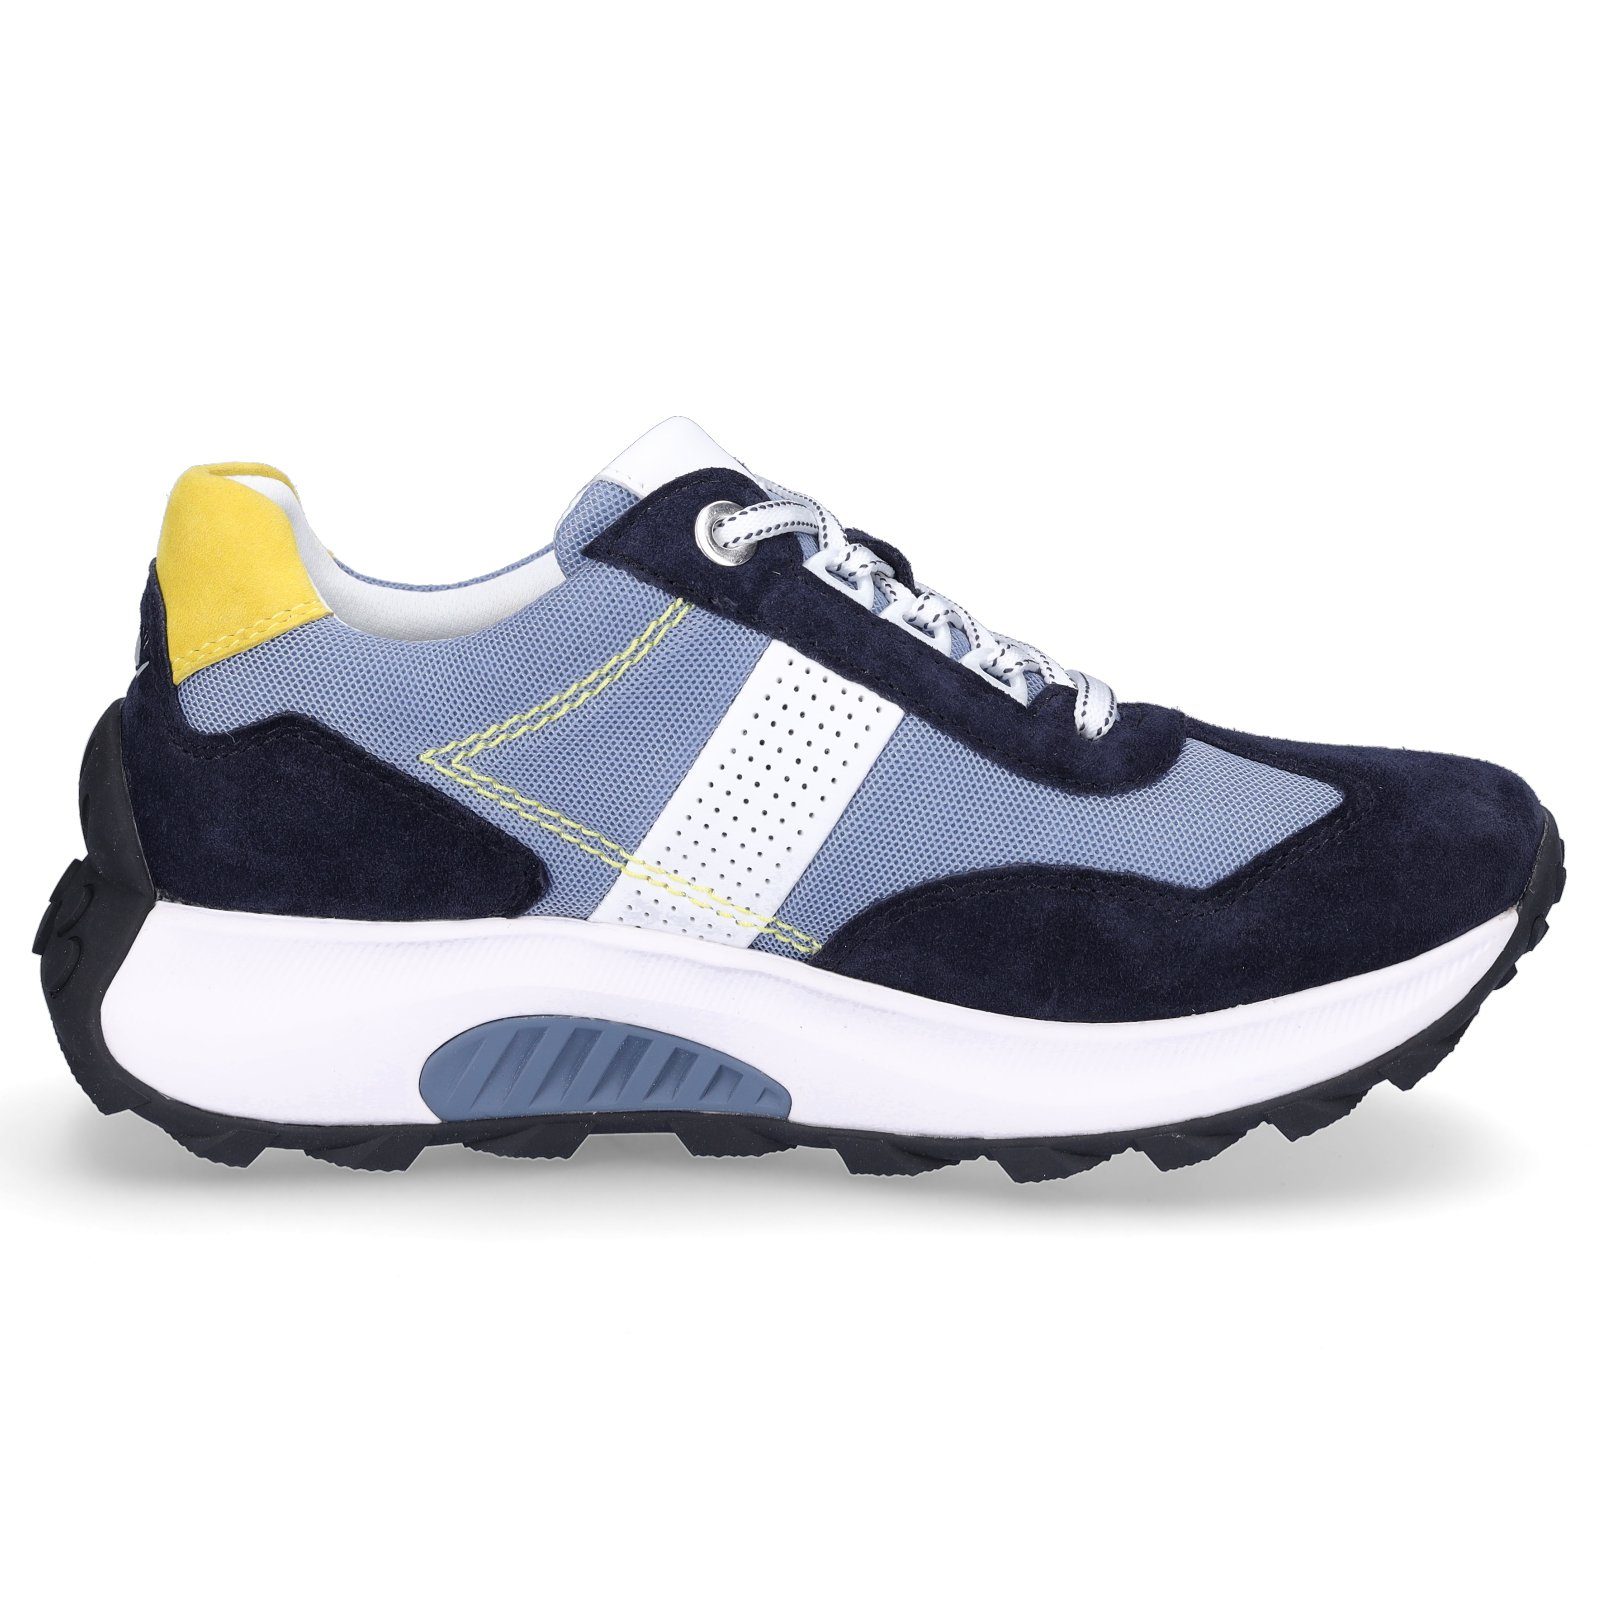 Gabor Gabor Damen Sneaker Mehrfarbig blau / 36) (marine/azur/white/yellow Sneaker